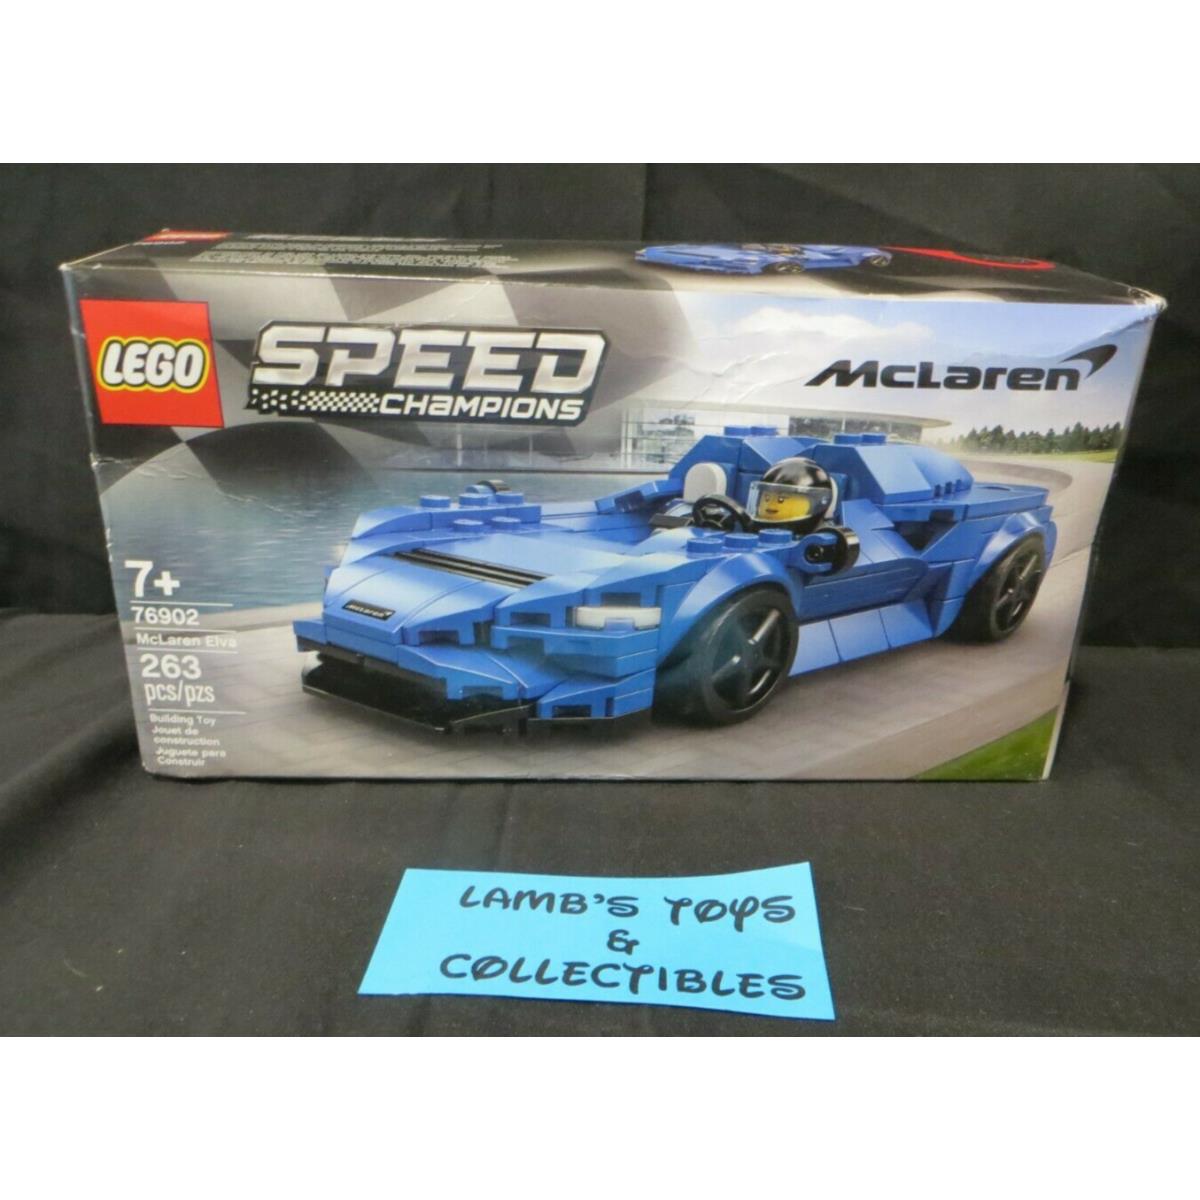 Lego Speed Champions Mclaren Elva Blue 76902 Racing Car Building Toy 263 Pieces